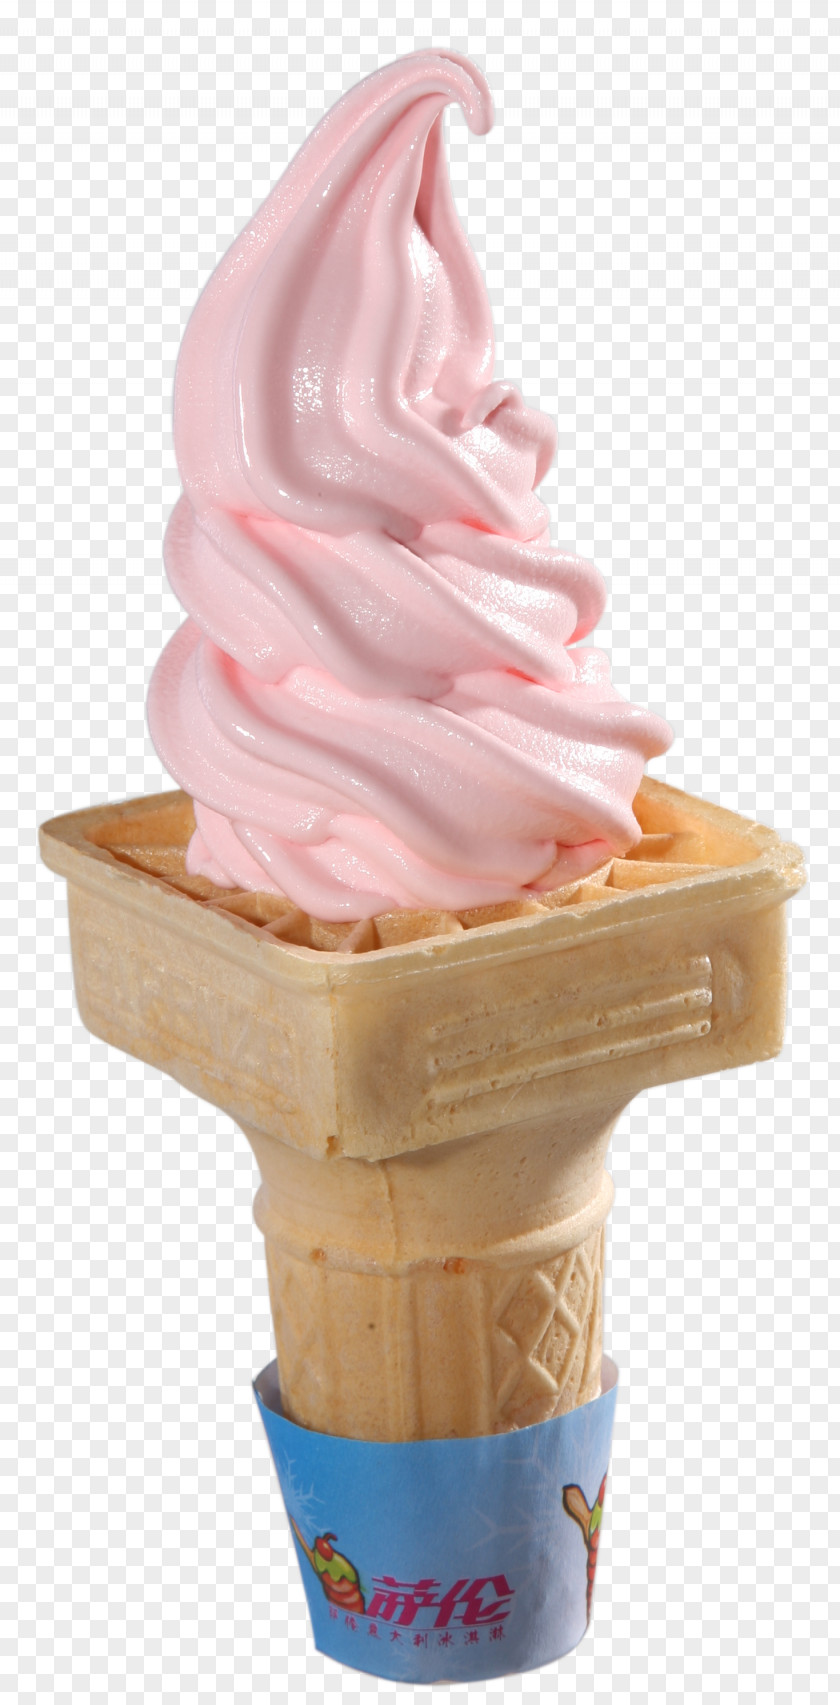 Cartoon Ice Cream Beverage Image Icon Cones Sundae Milkshake Frozen Yogurt PNG